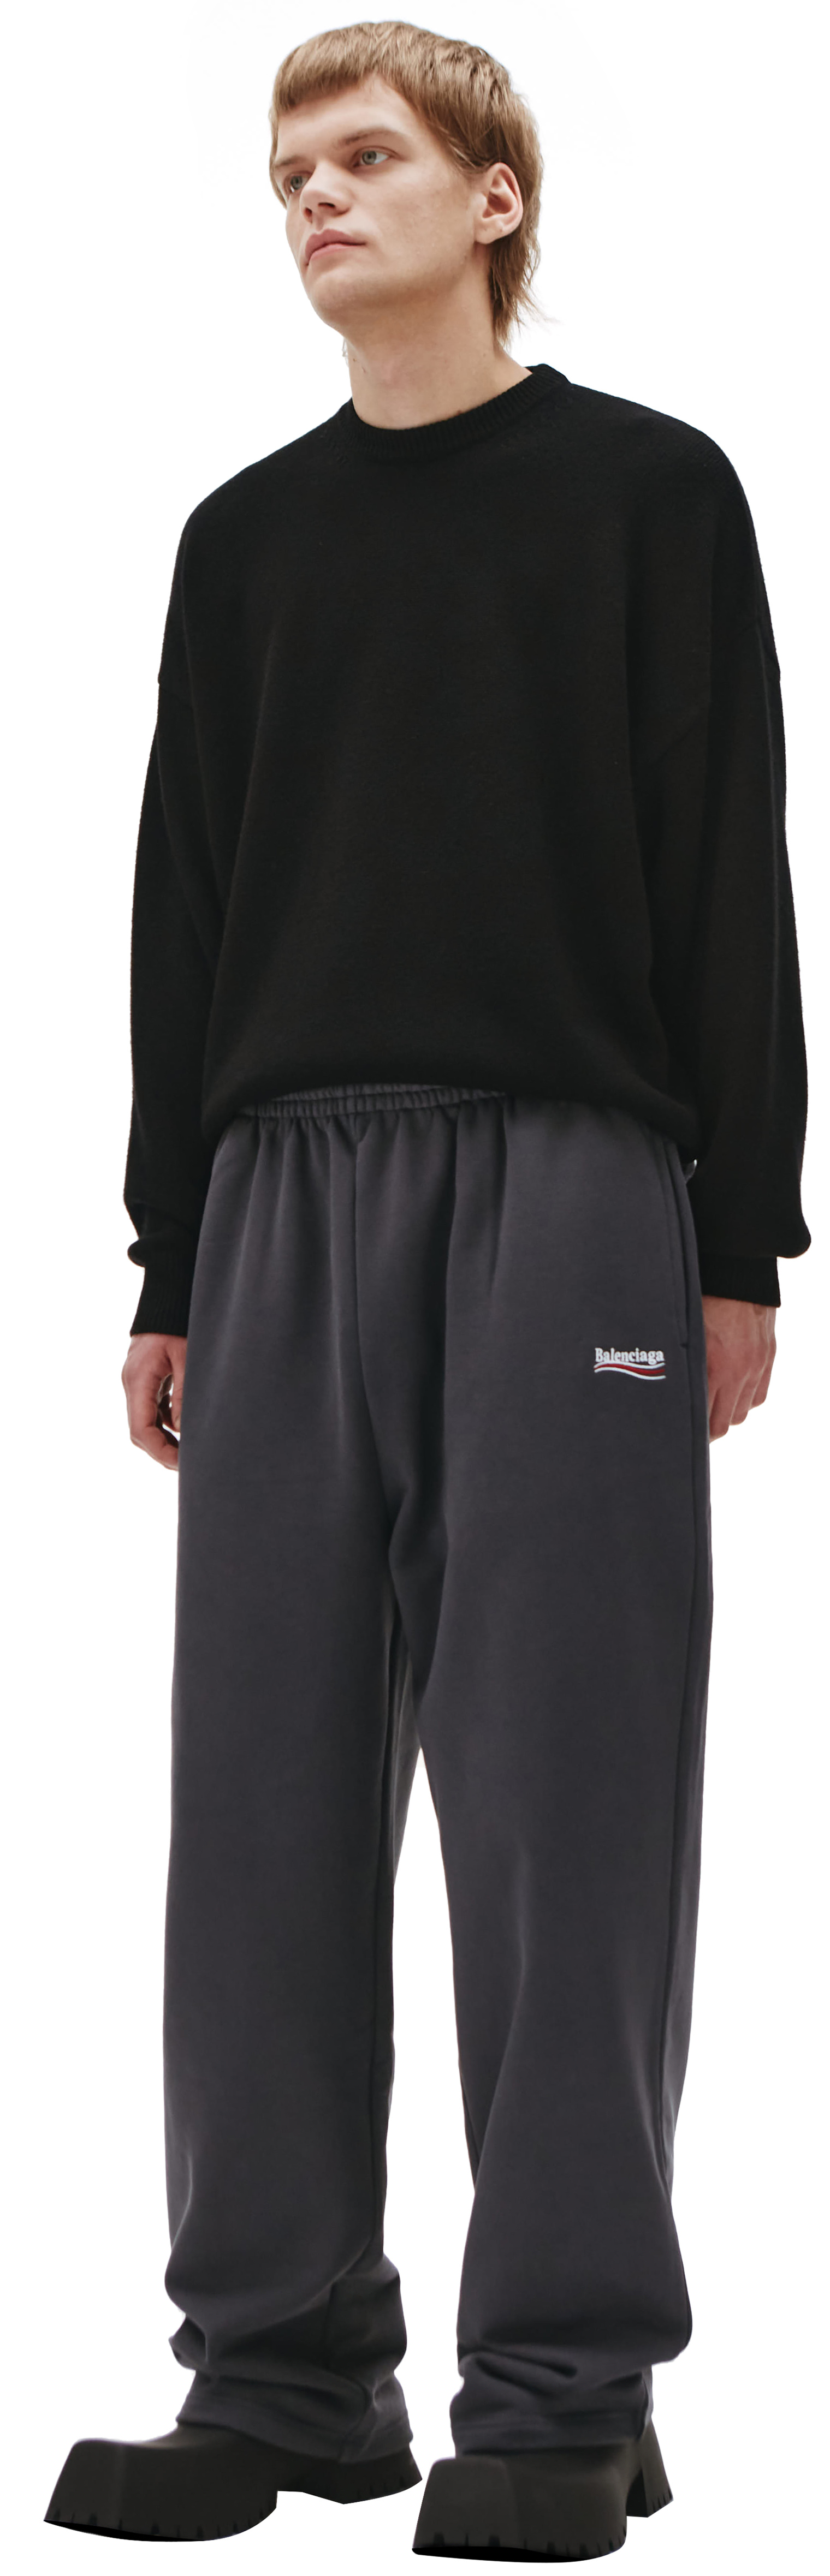 Balenciaga men grey fleece jogging pants for $759 online on SV77, 674594/TKVI9/1366